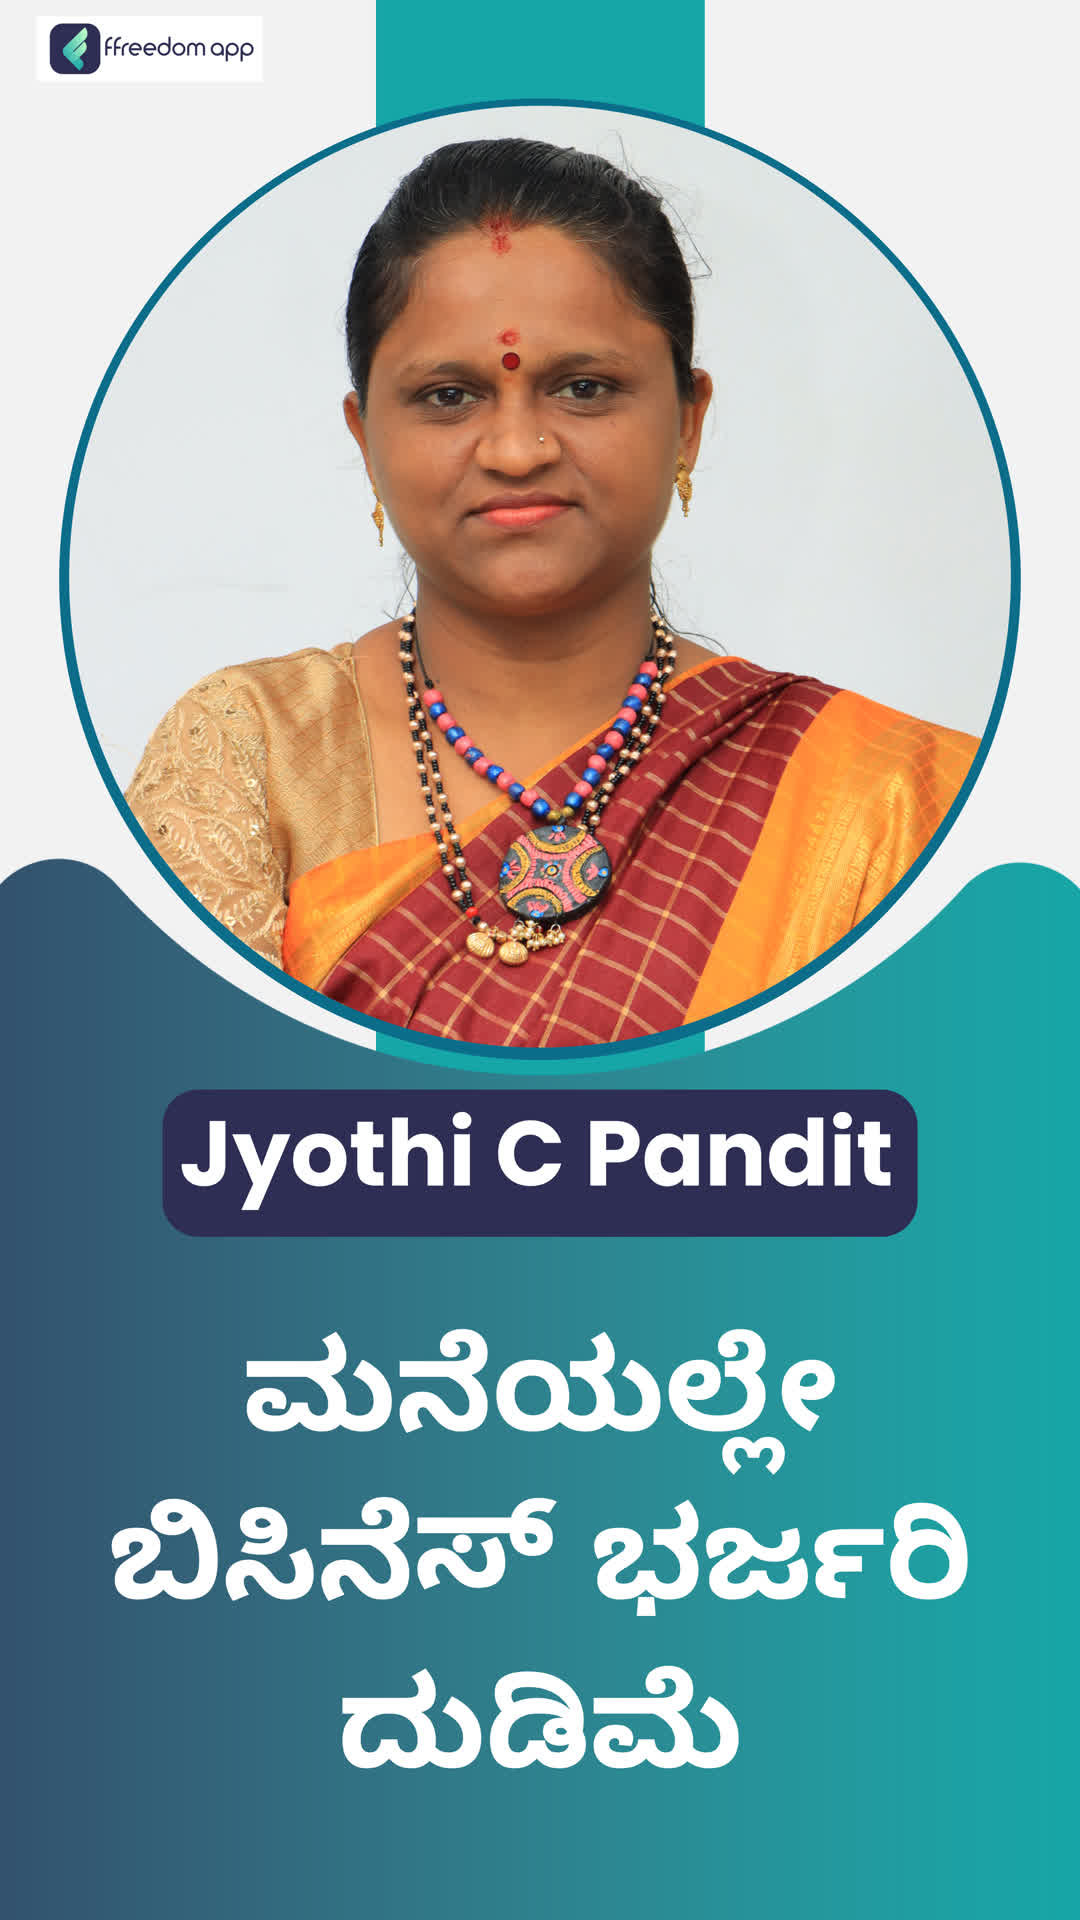 Jyothi c pandit's Honest Review of ffreedom app - Bengaluru City ,Karnataka